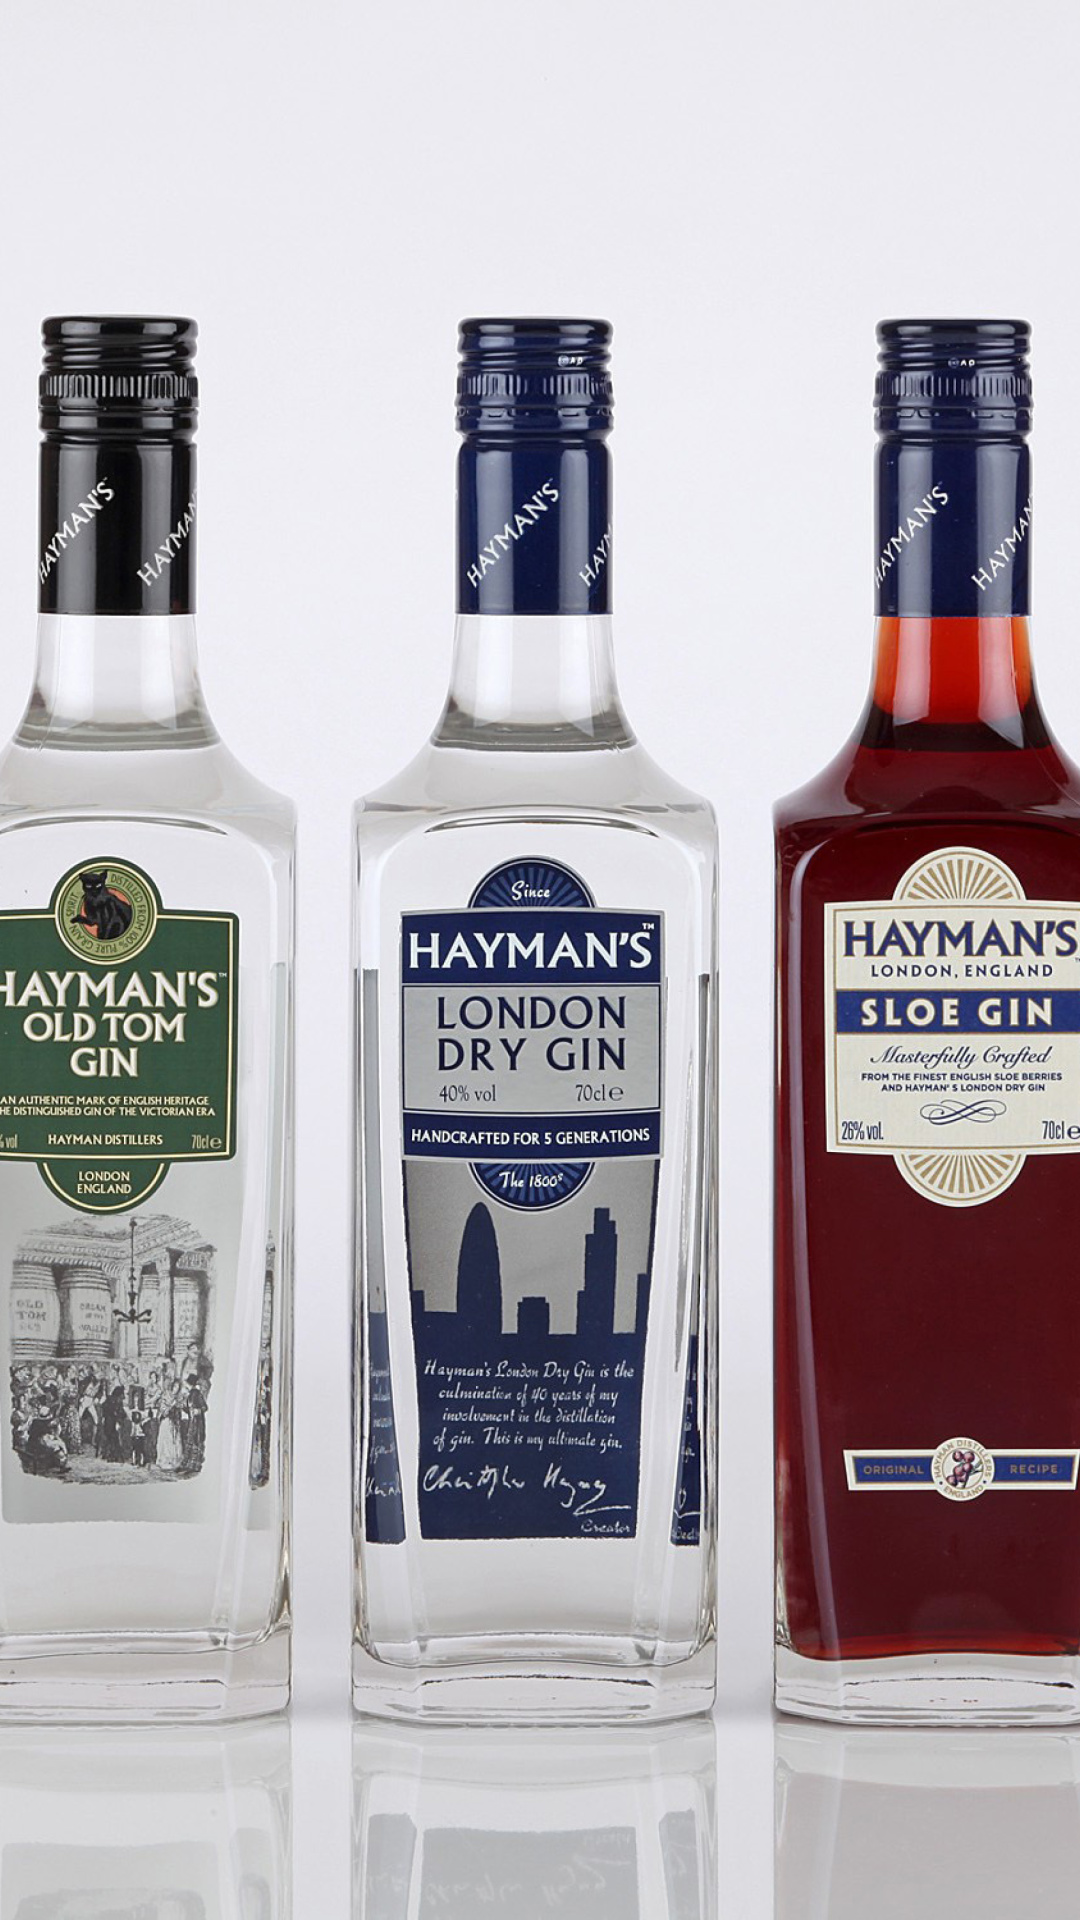 Sfondi Haymans London Dry Gin 1080x1920